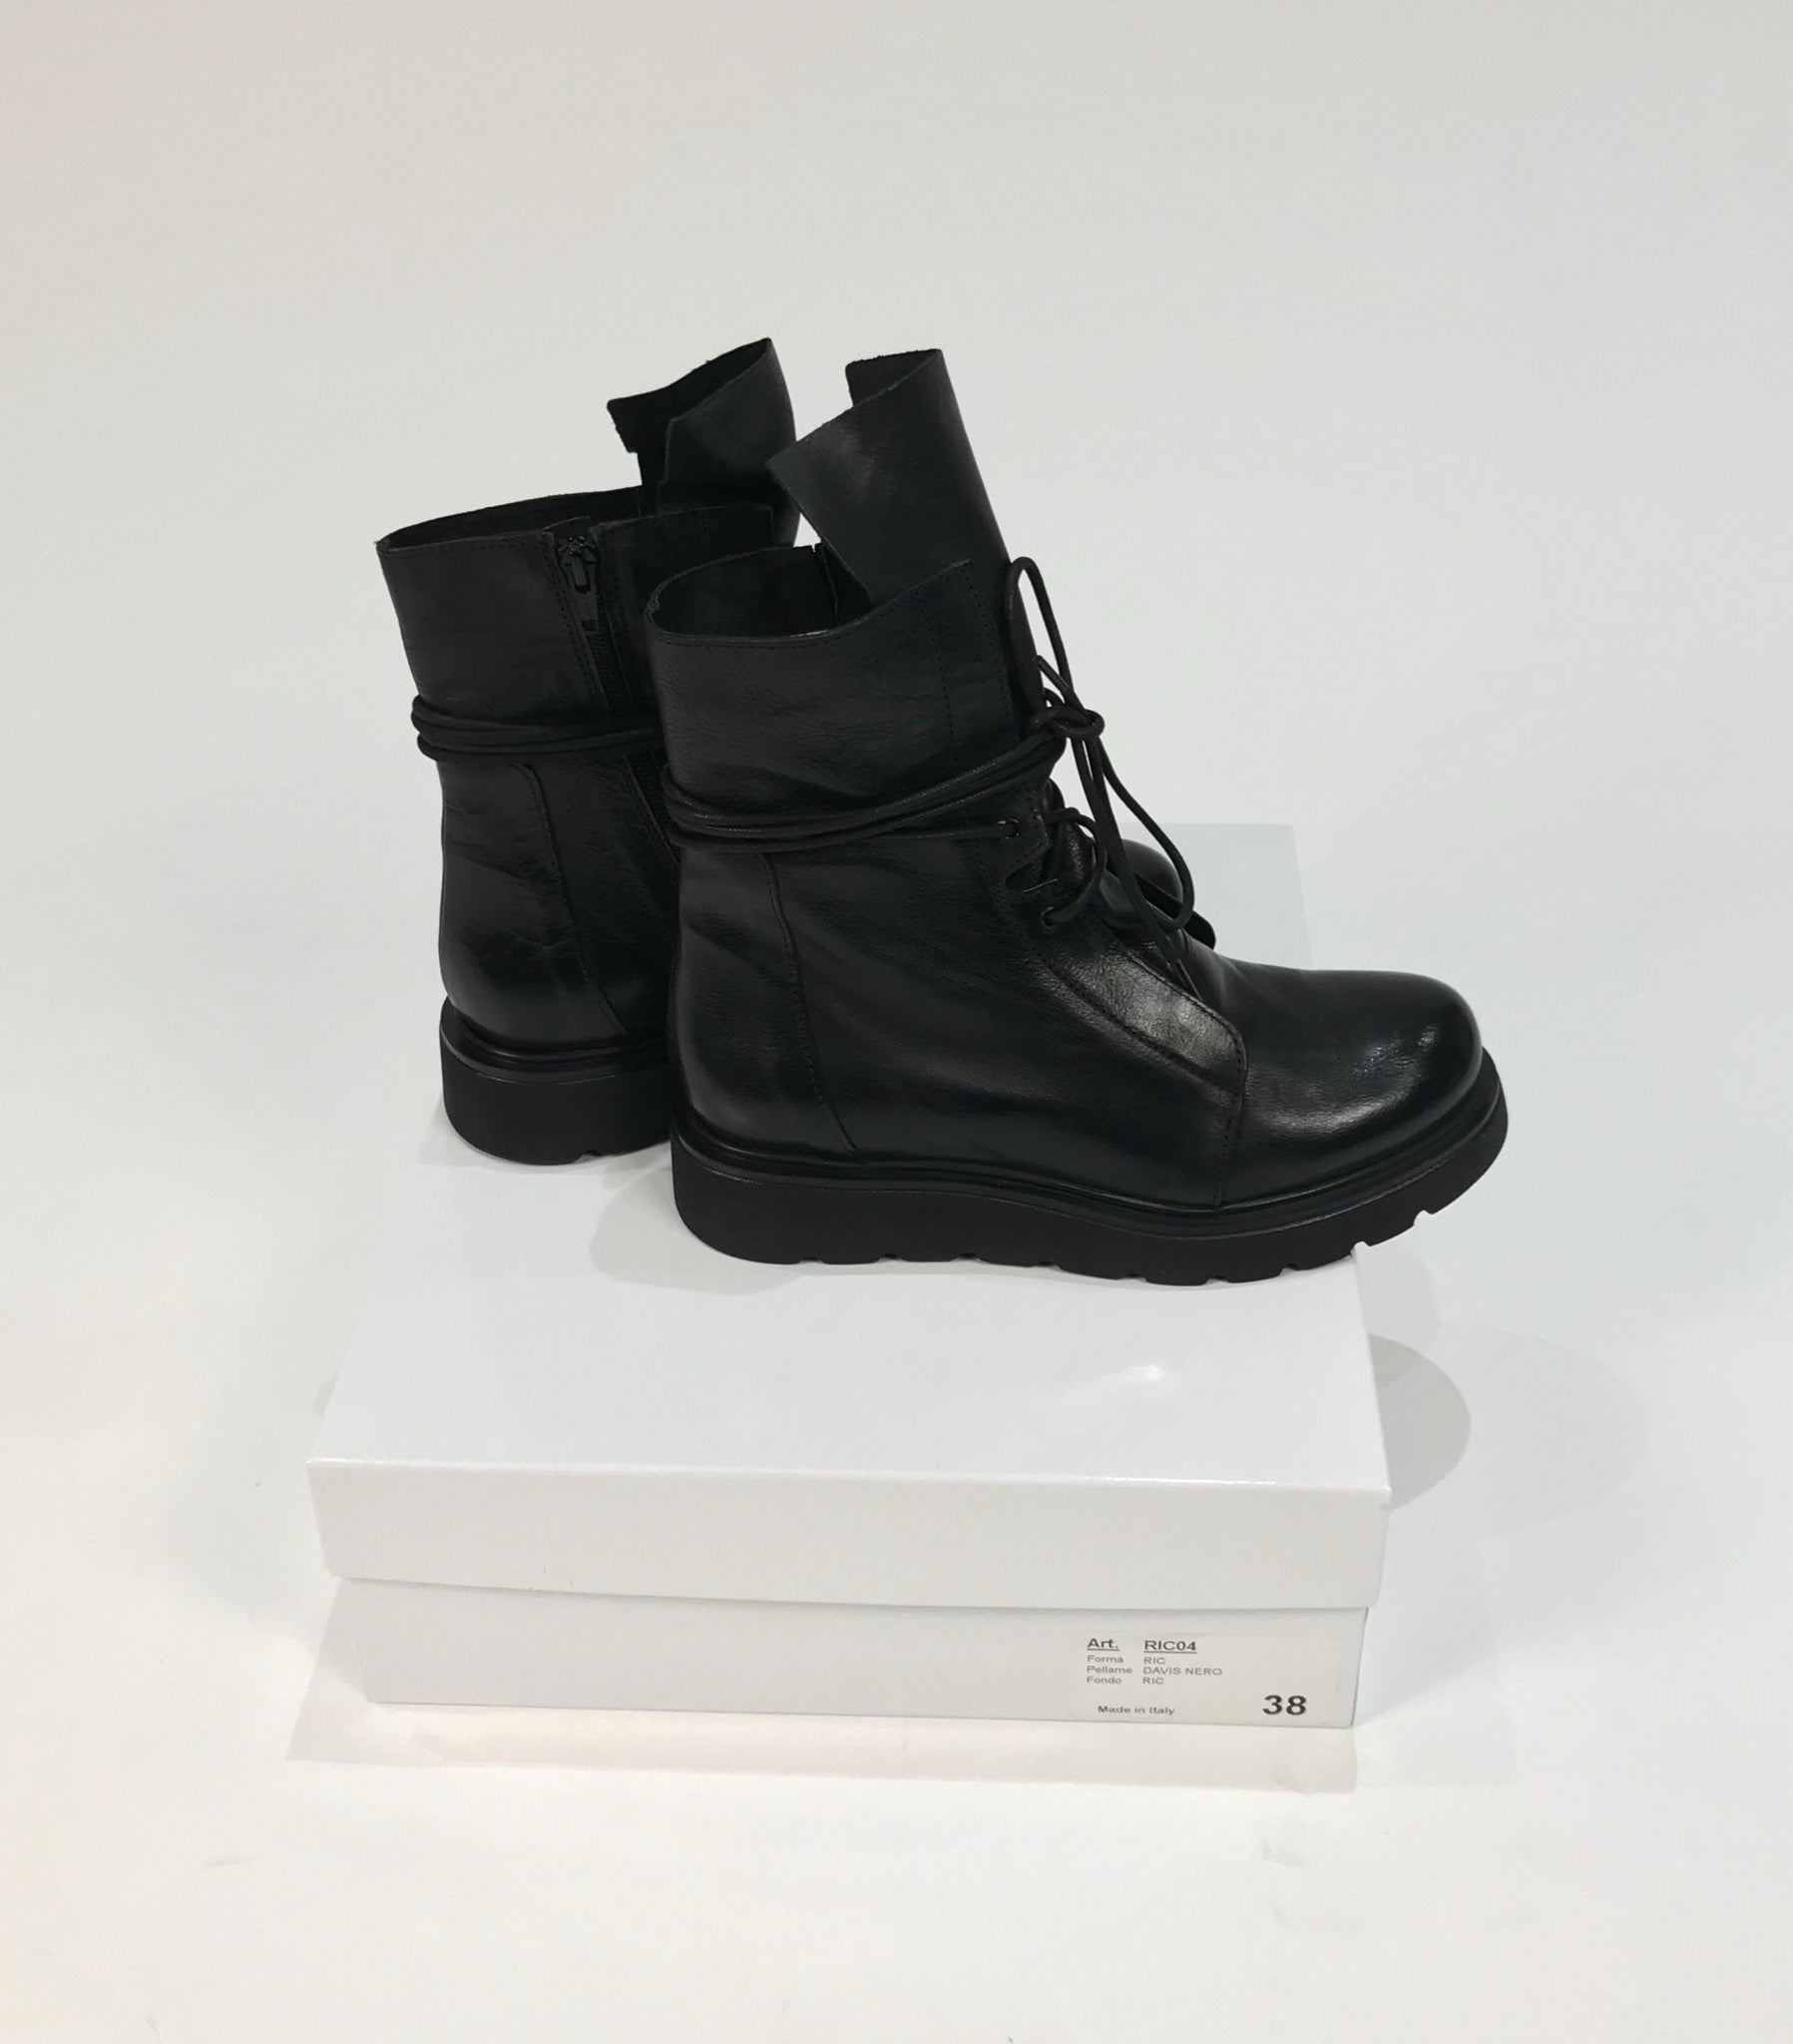 'Ric' Black Leather Lace Up Shiny Boots - Jessimara